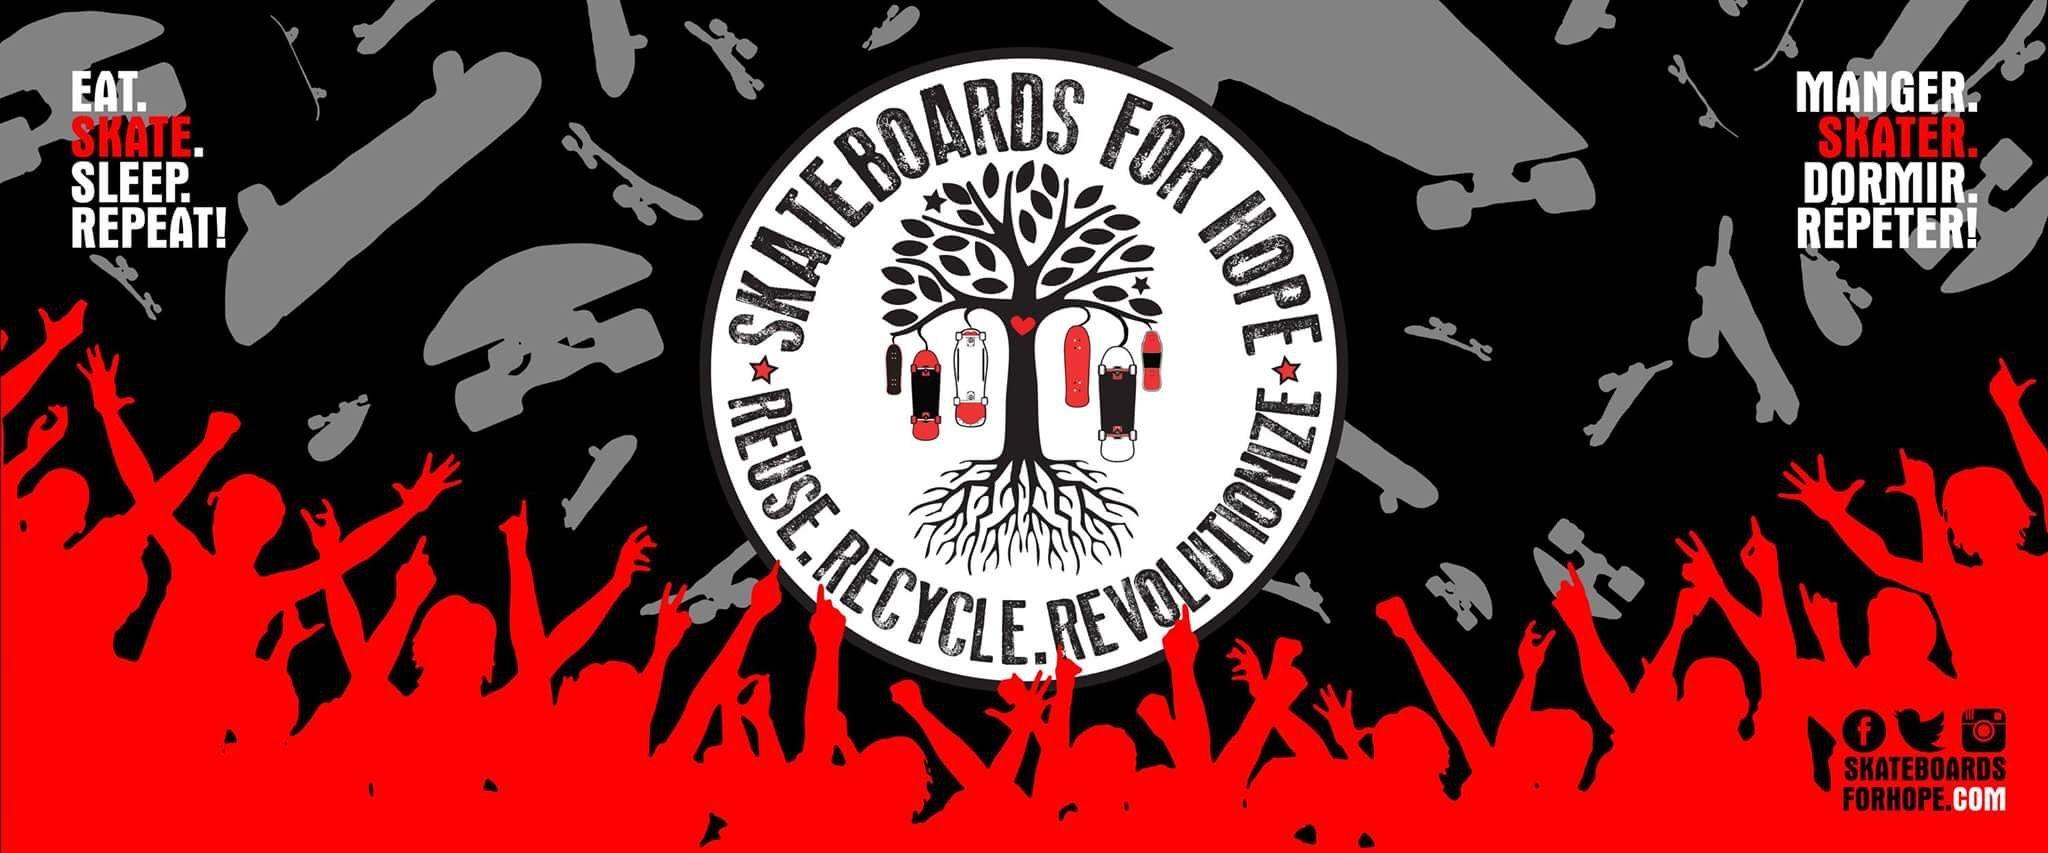 Jackalope Helmet Logo - JACKALOPE X Skateboards For Hope